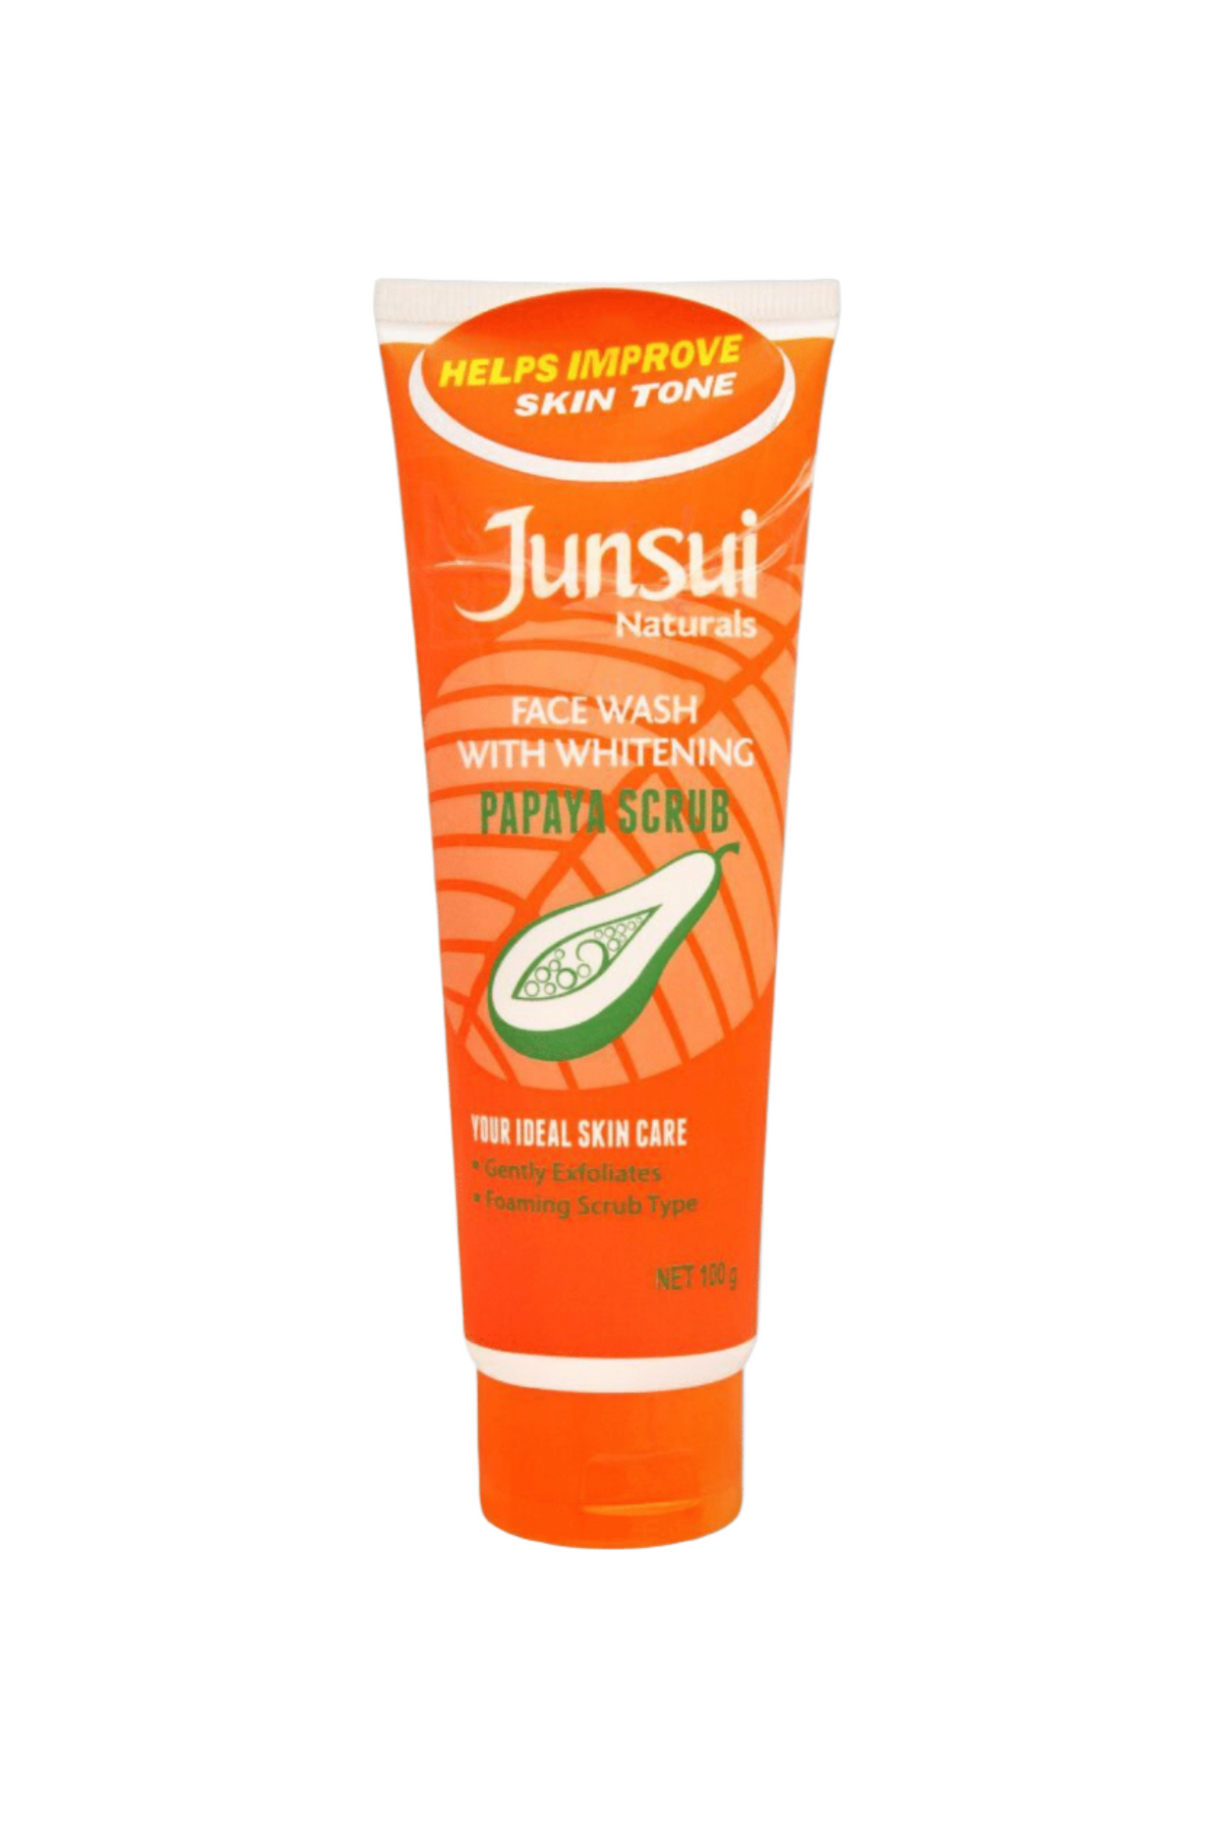 junsui face wash papaya scrub 100g